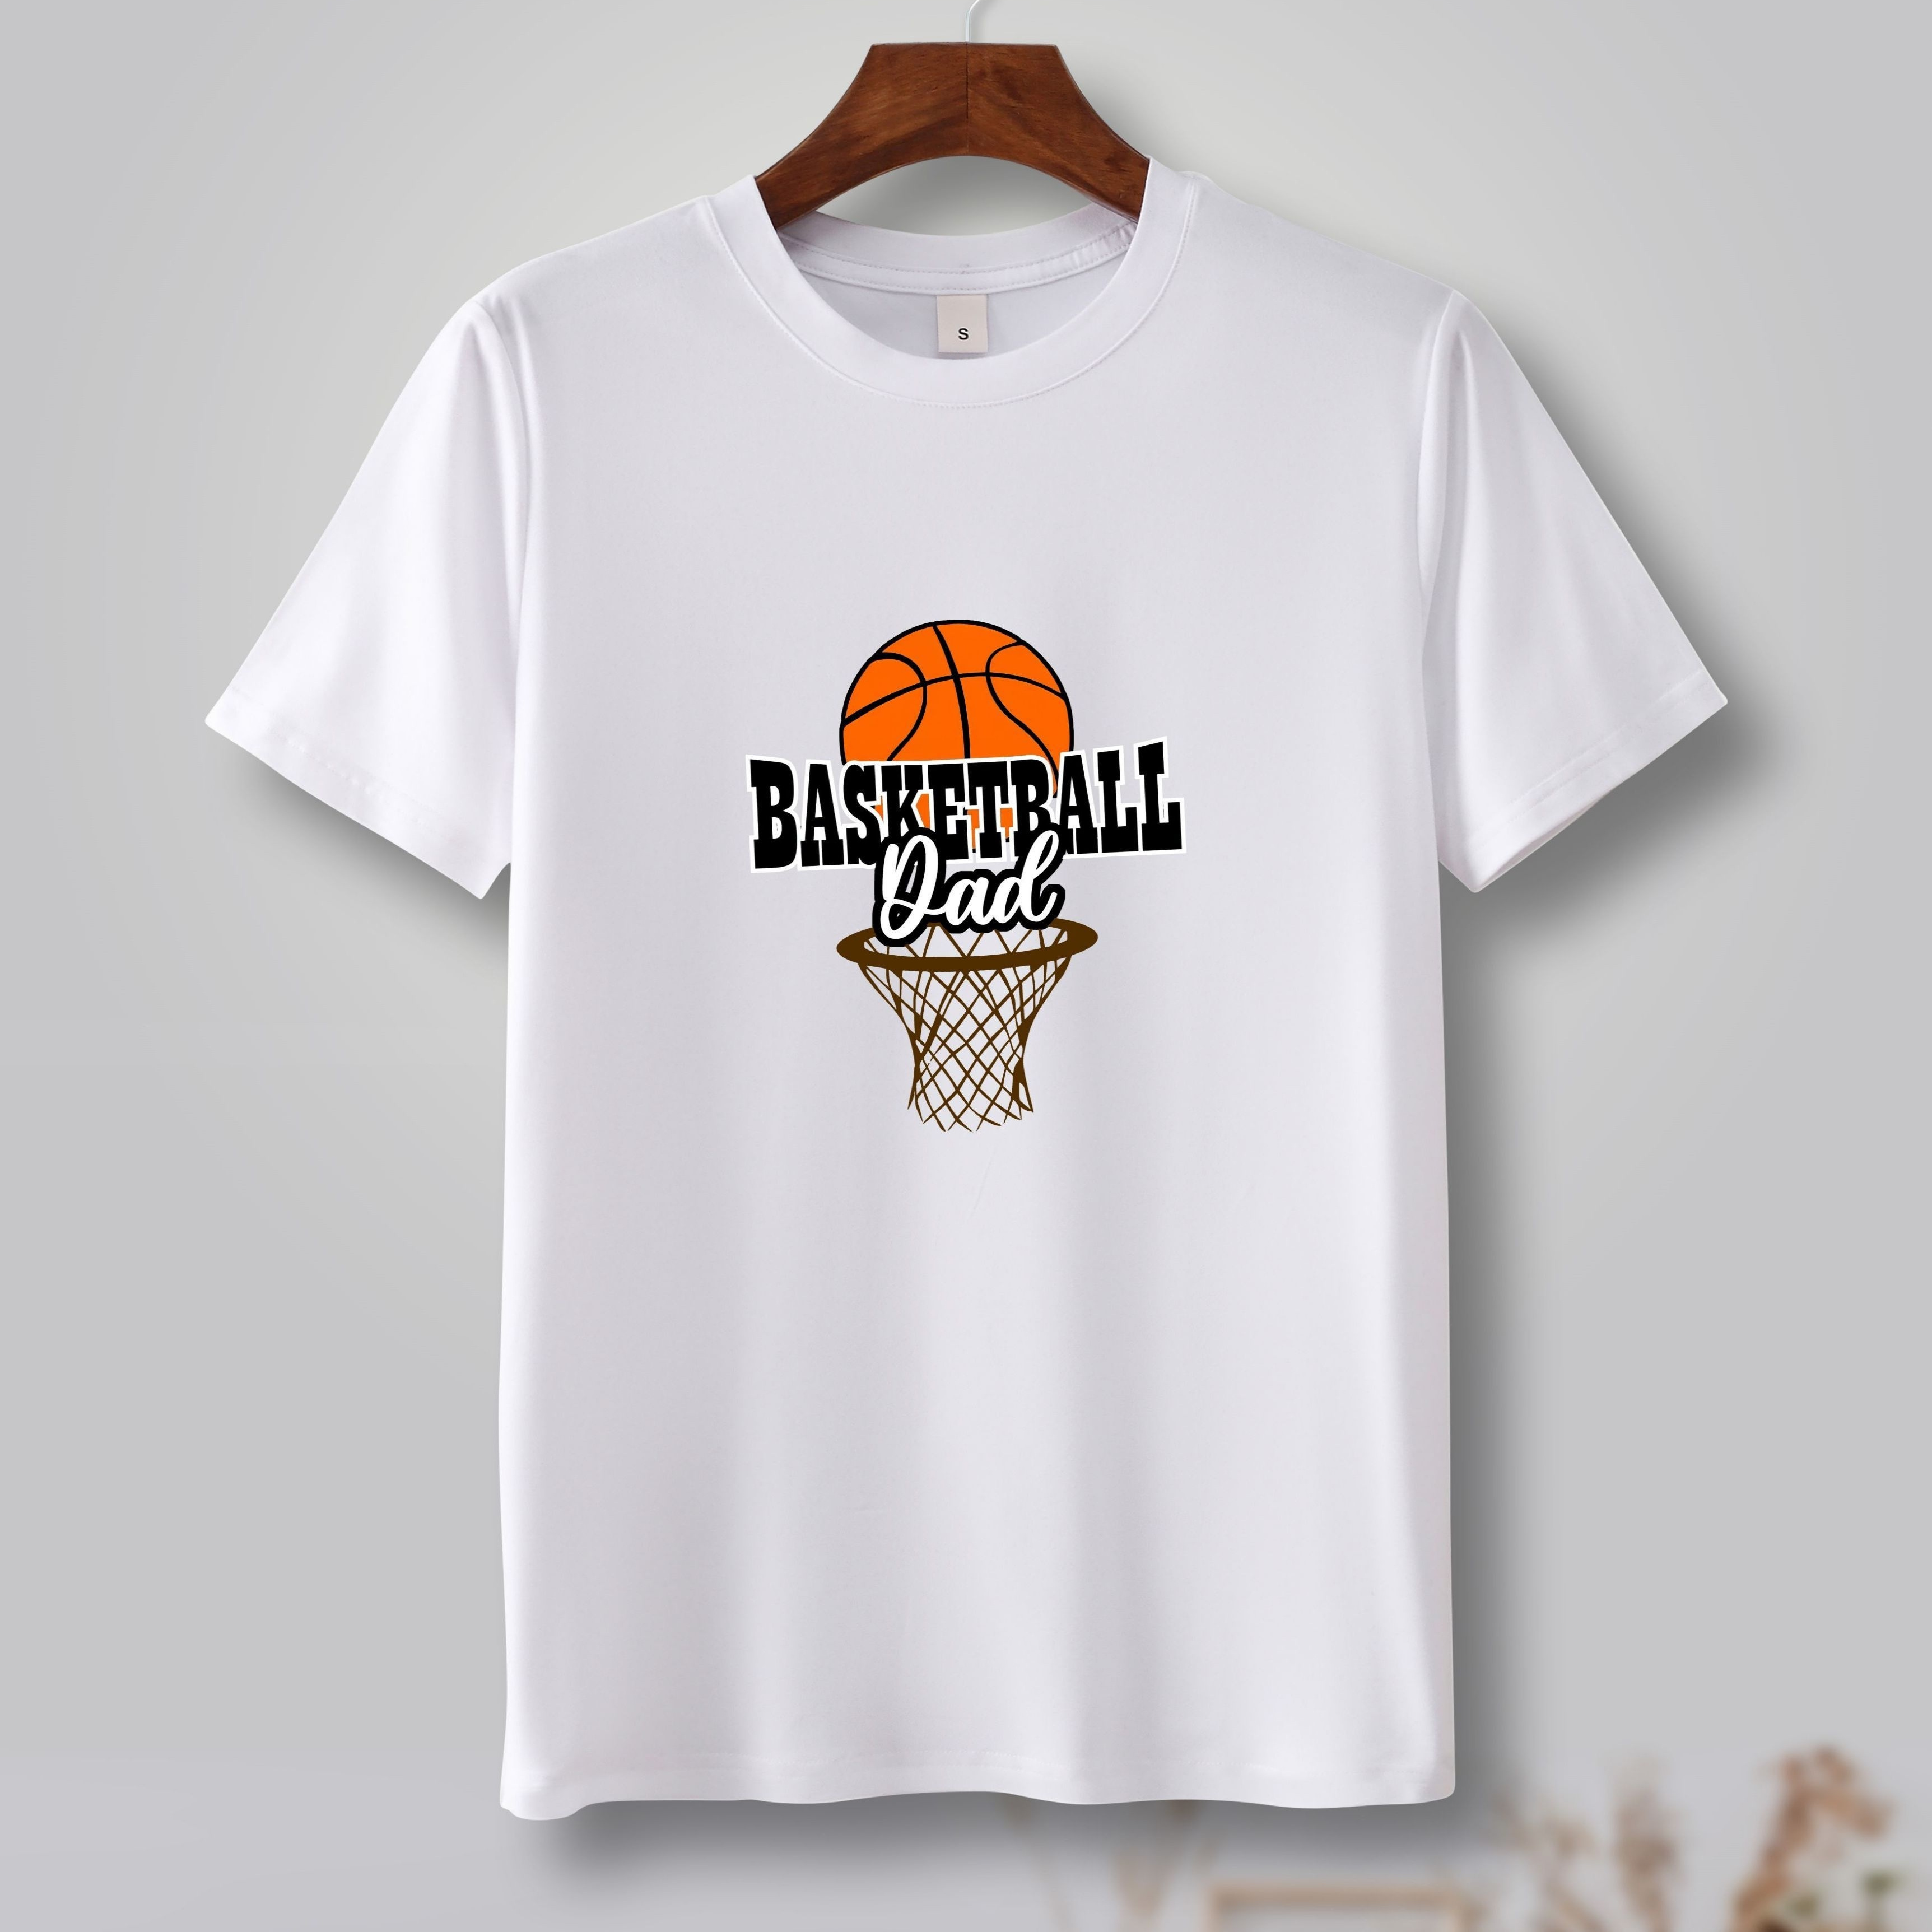 

Basketball Dad Print T Shirt, Tees For Men, Casual Short Sleeve T-shirt For Summer